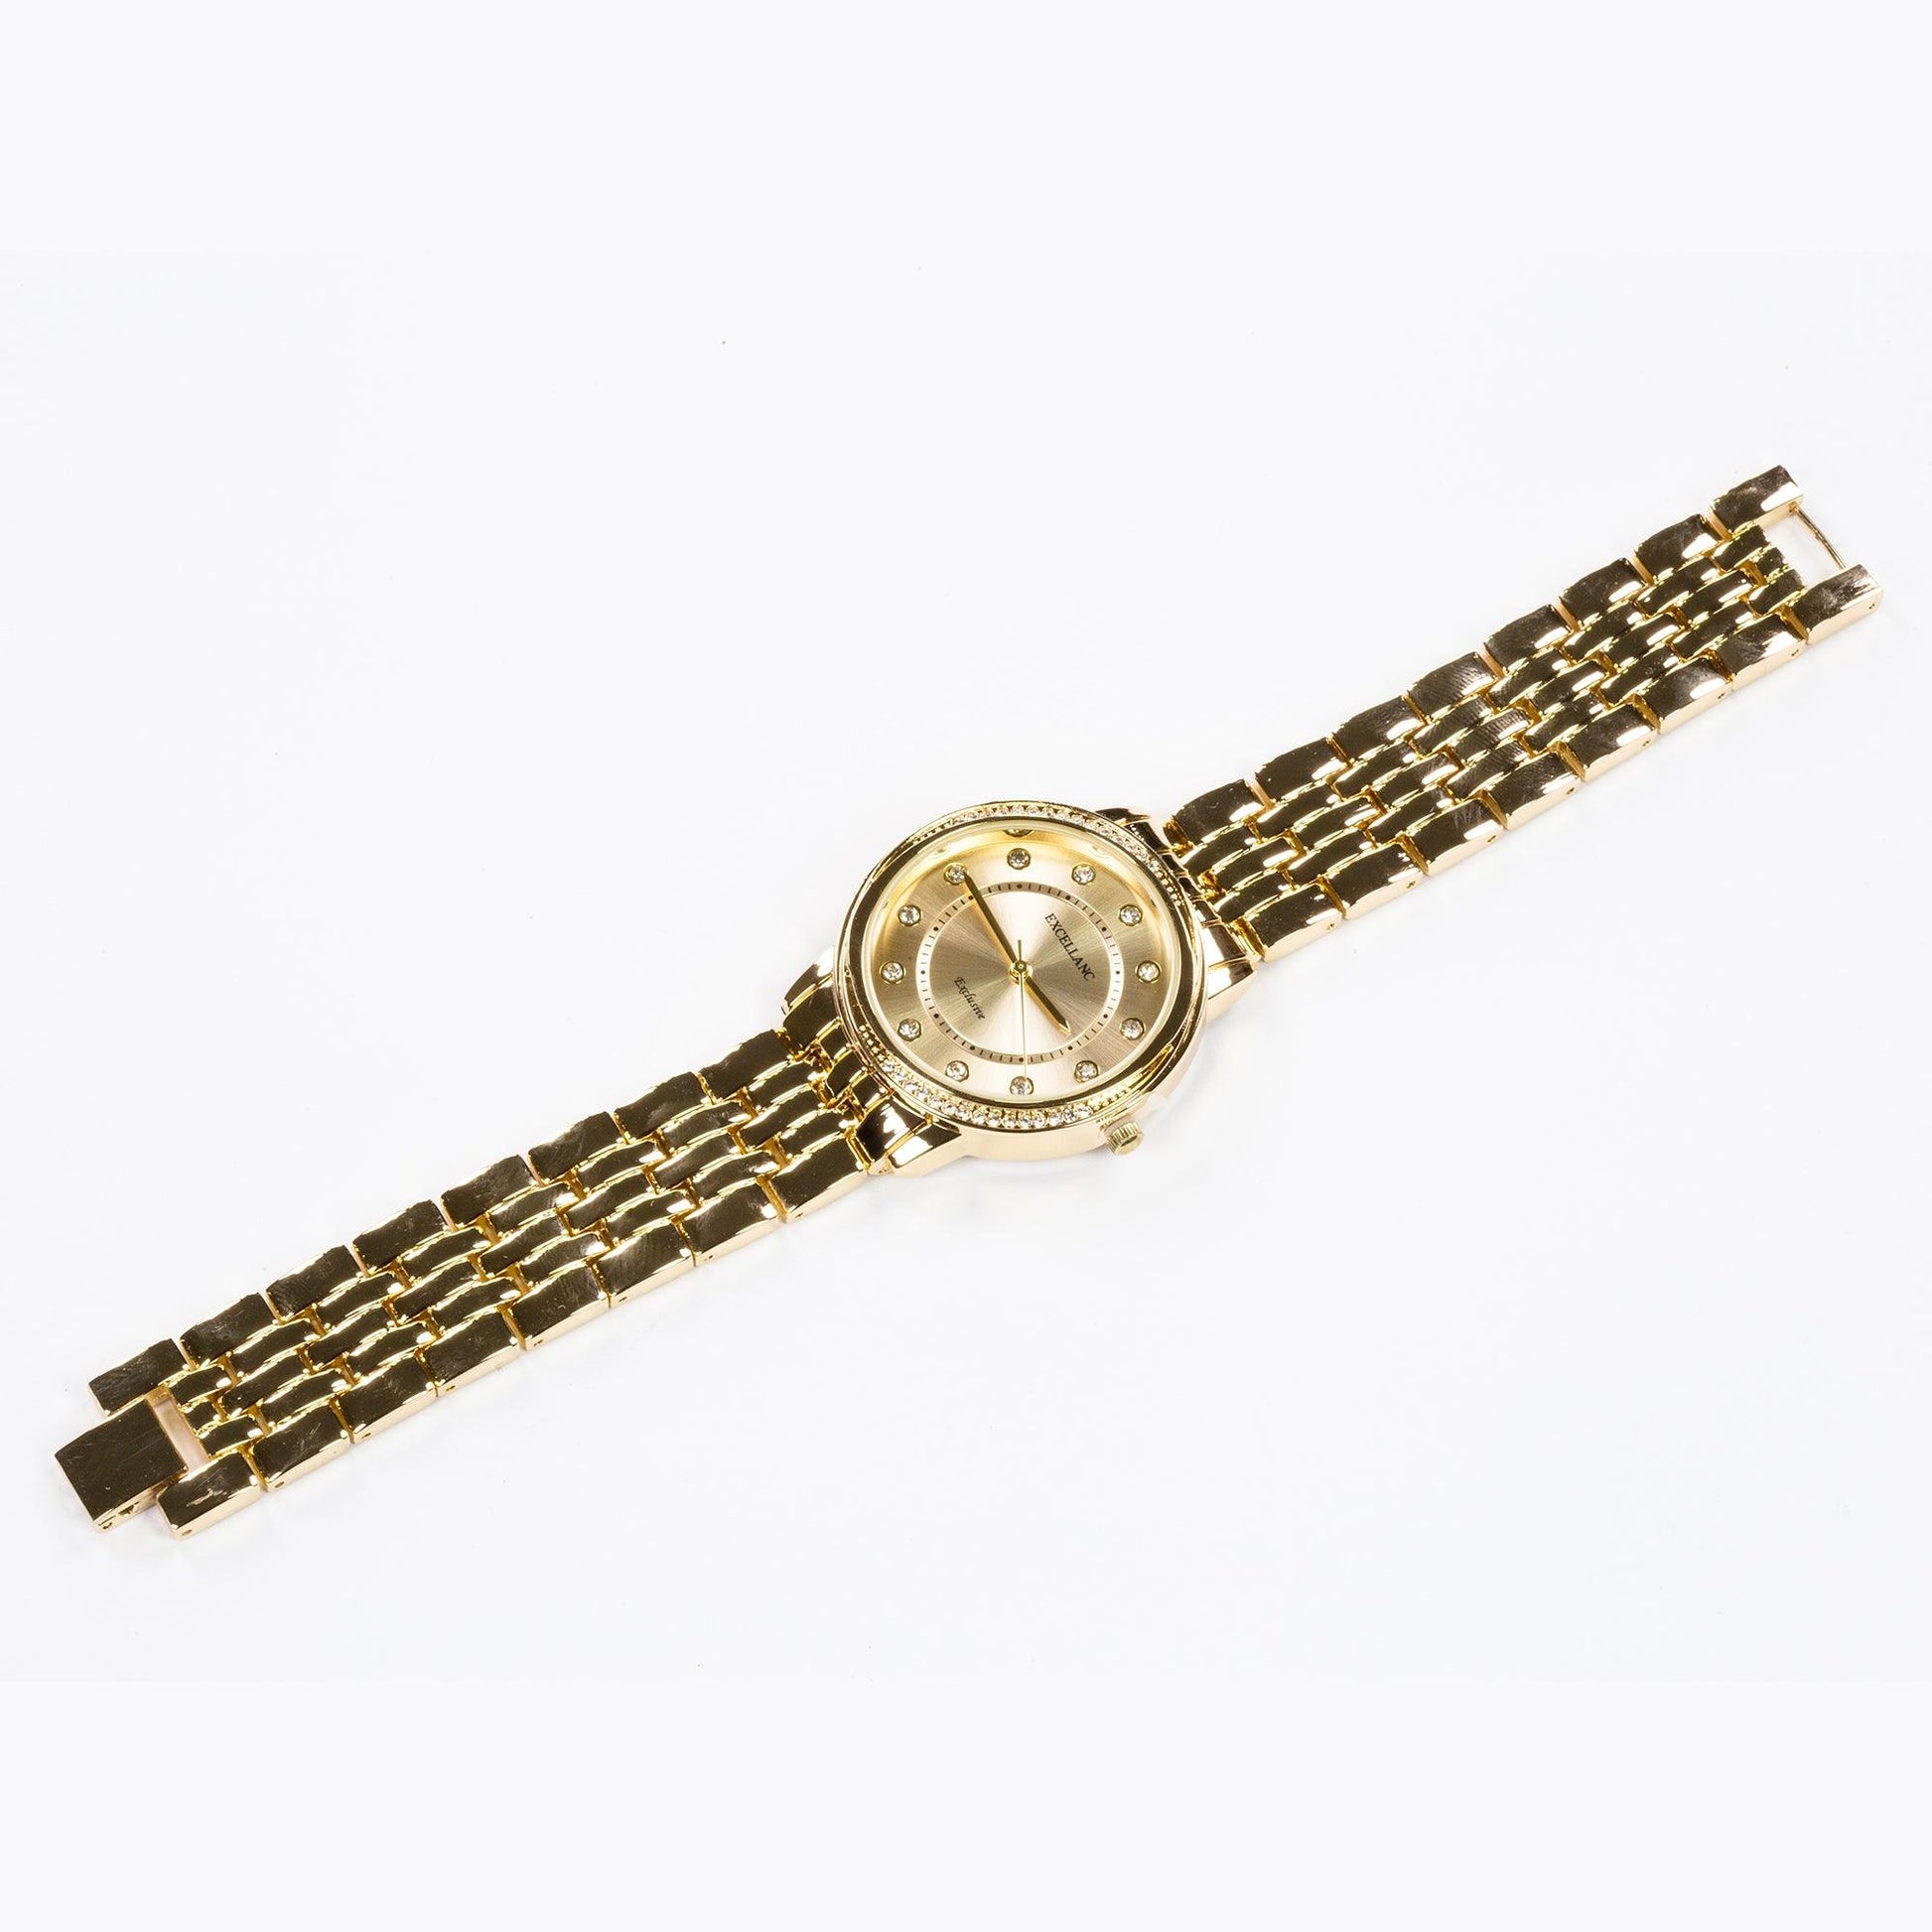 Excellanc gift set, ladies, watch, bracelet, bangle, gold-colored - Bijuterii TV